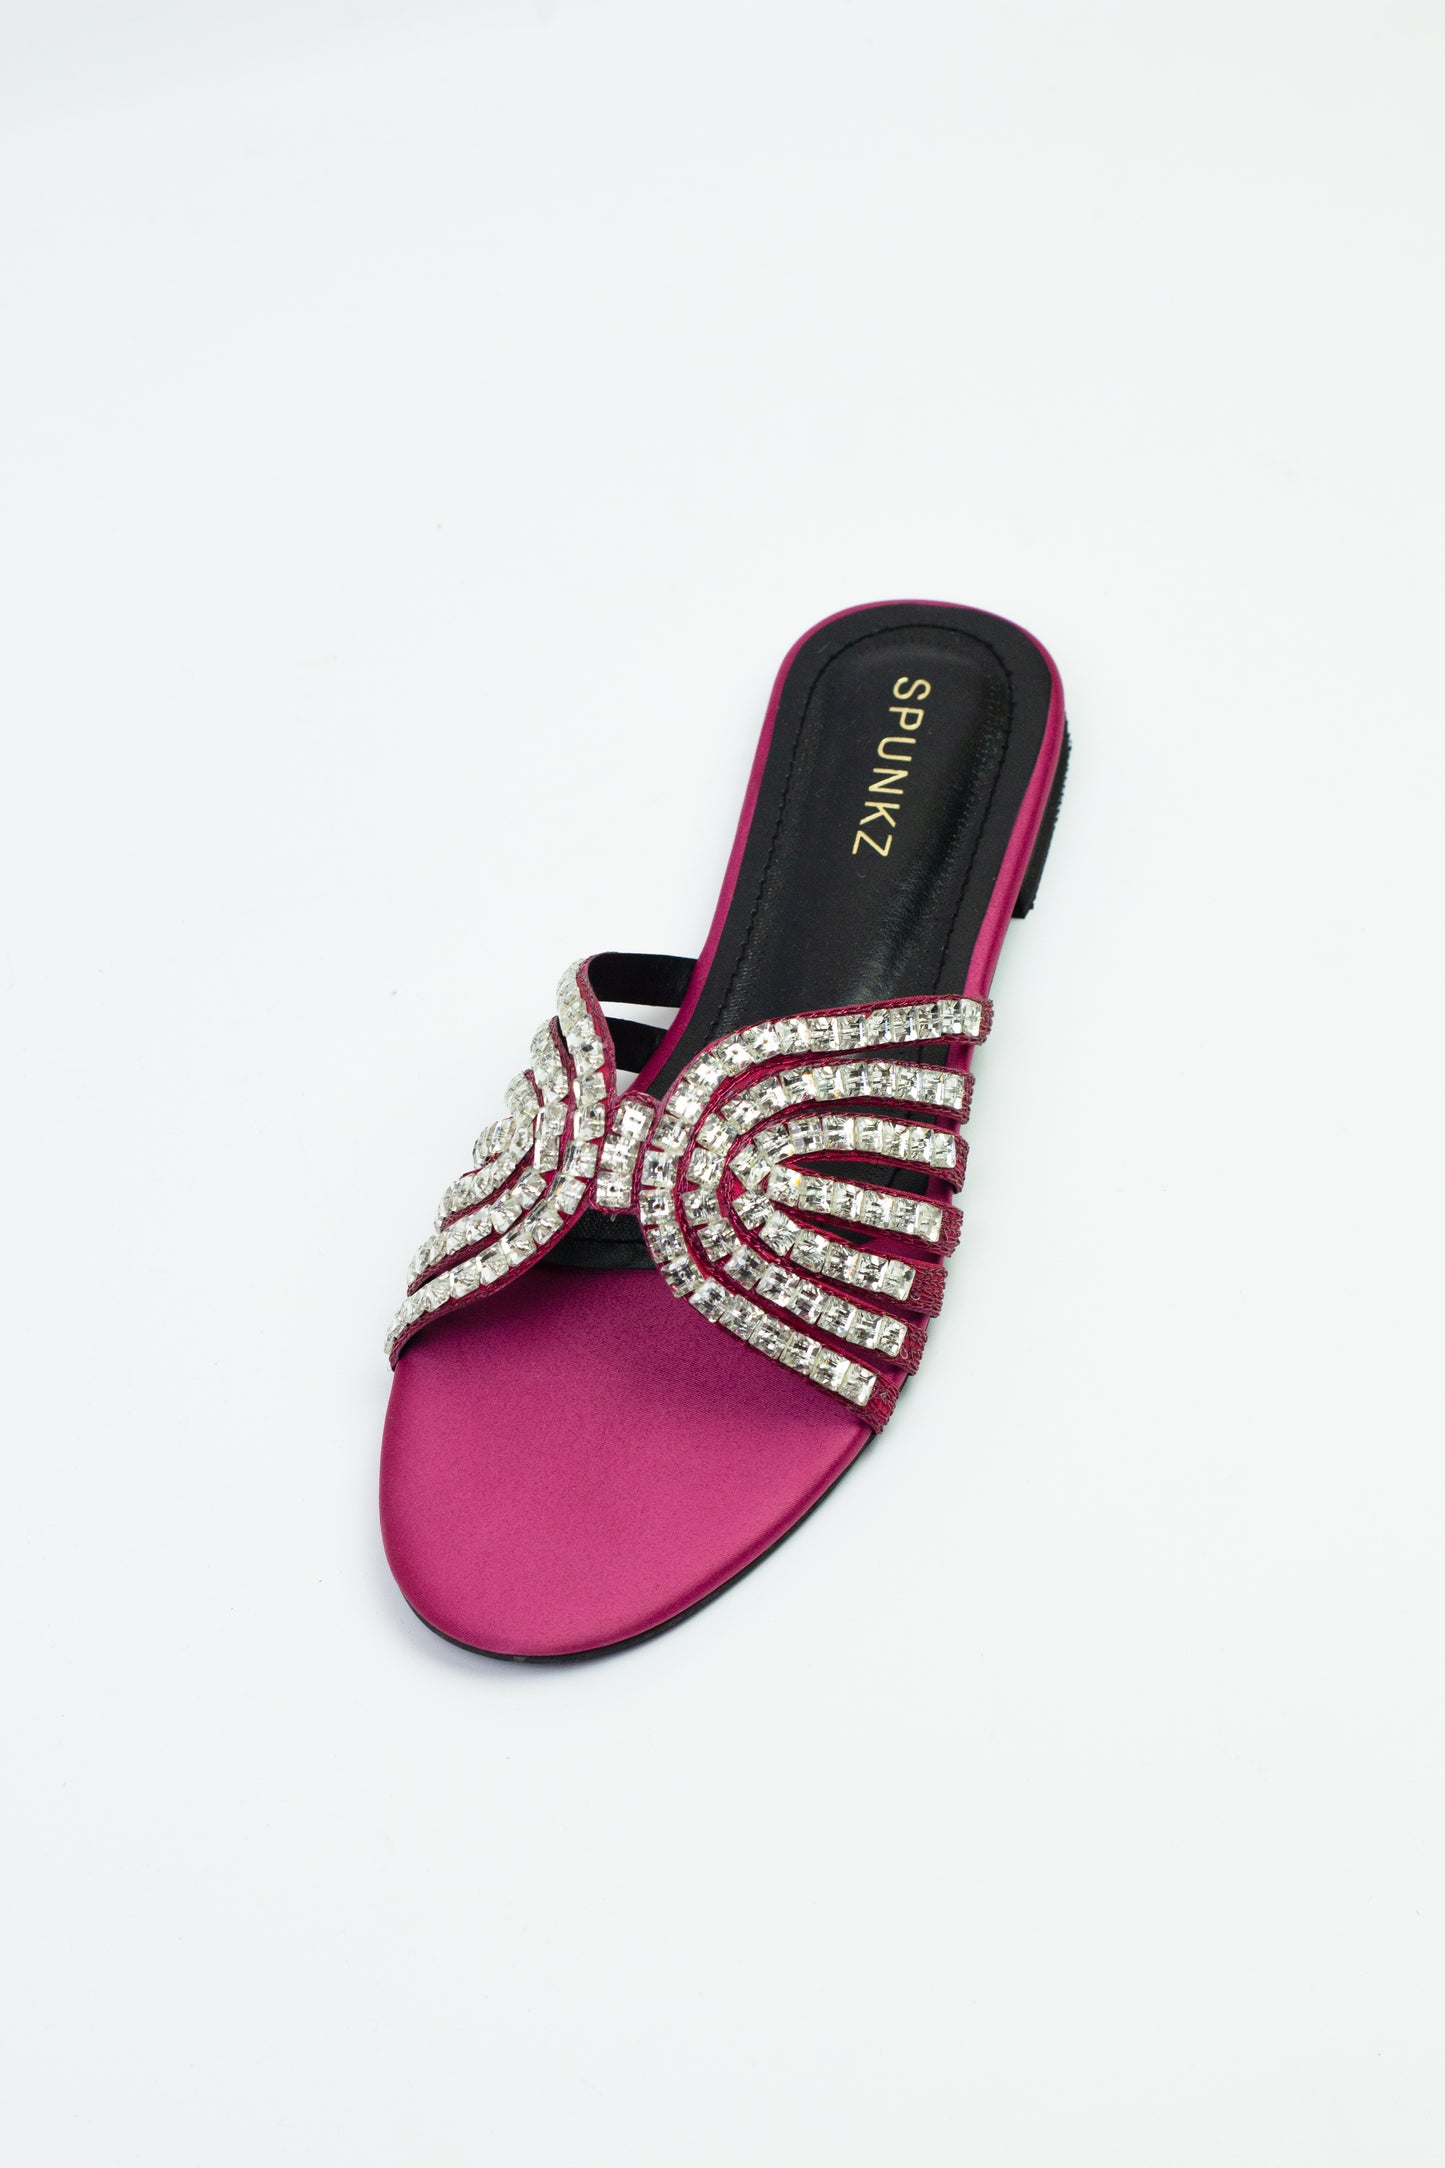 Jamie Pink Criss-Cross Crystal-Studded Flats Sandals